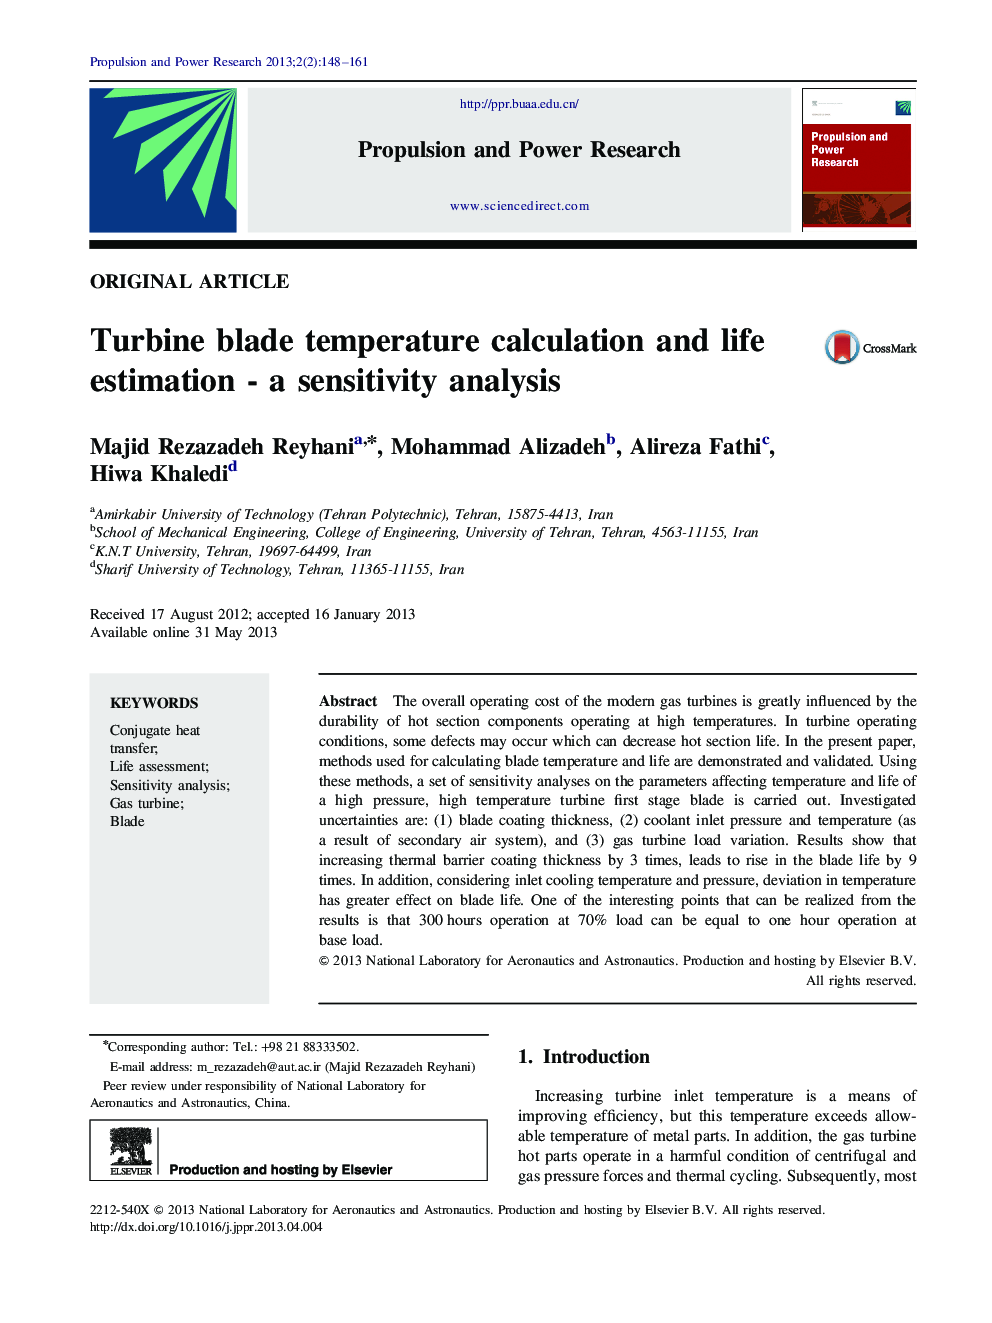 Turbine blade temperature calculation and life estimation - a sensitivity analysis 